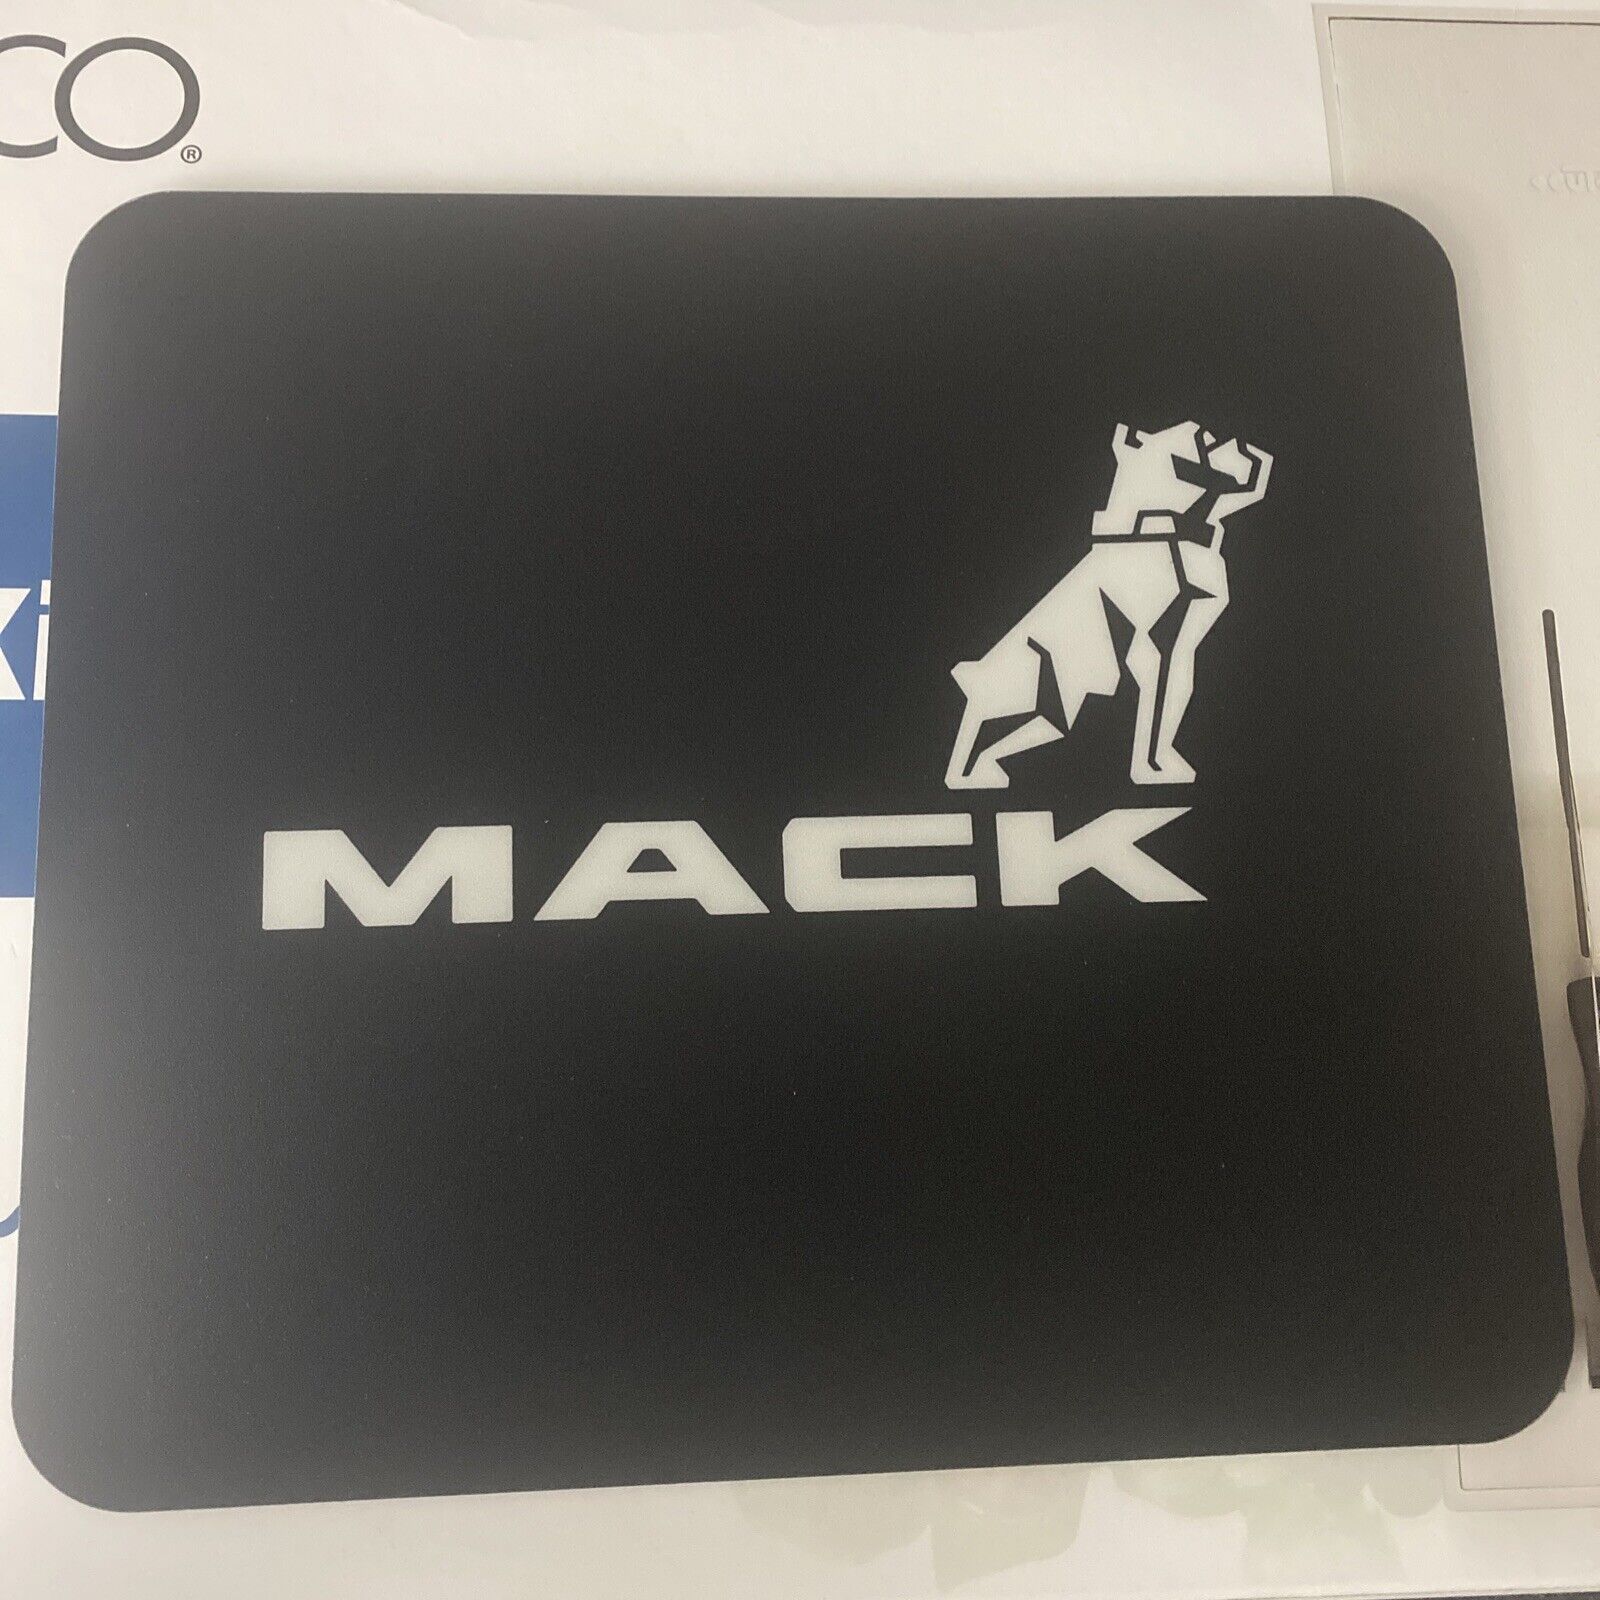 Mack Trucks Bulldog Logo School/Work/ Office Computer Mouse Pad